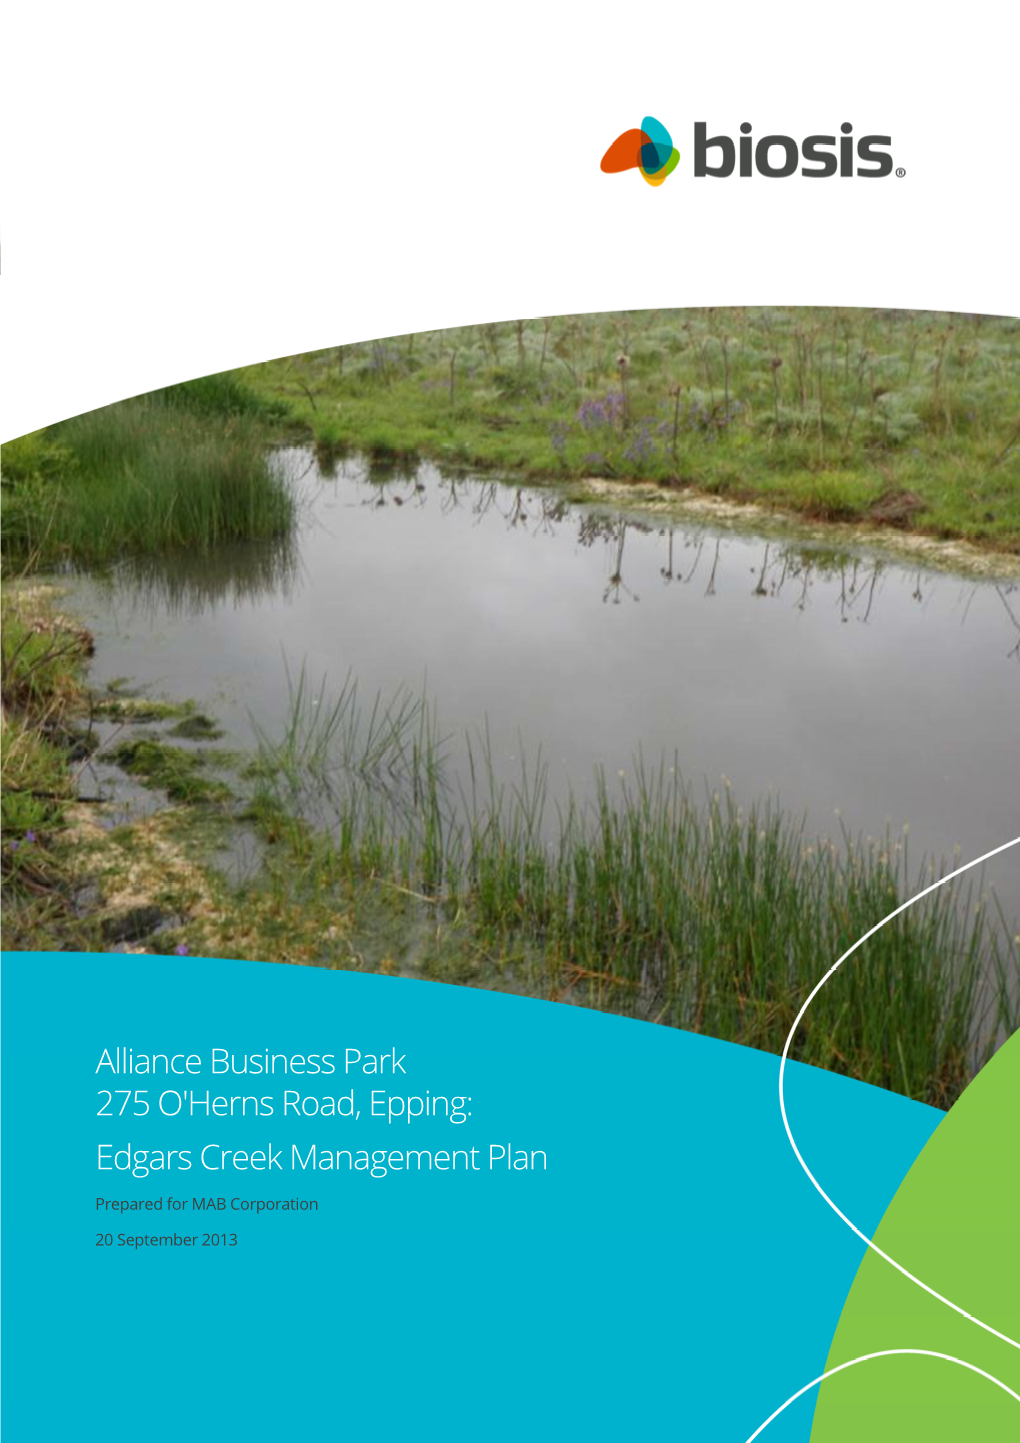 Alliance Business Park 275 O'herns Road, Epping: Edgars Creek Management Plan